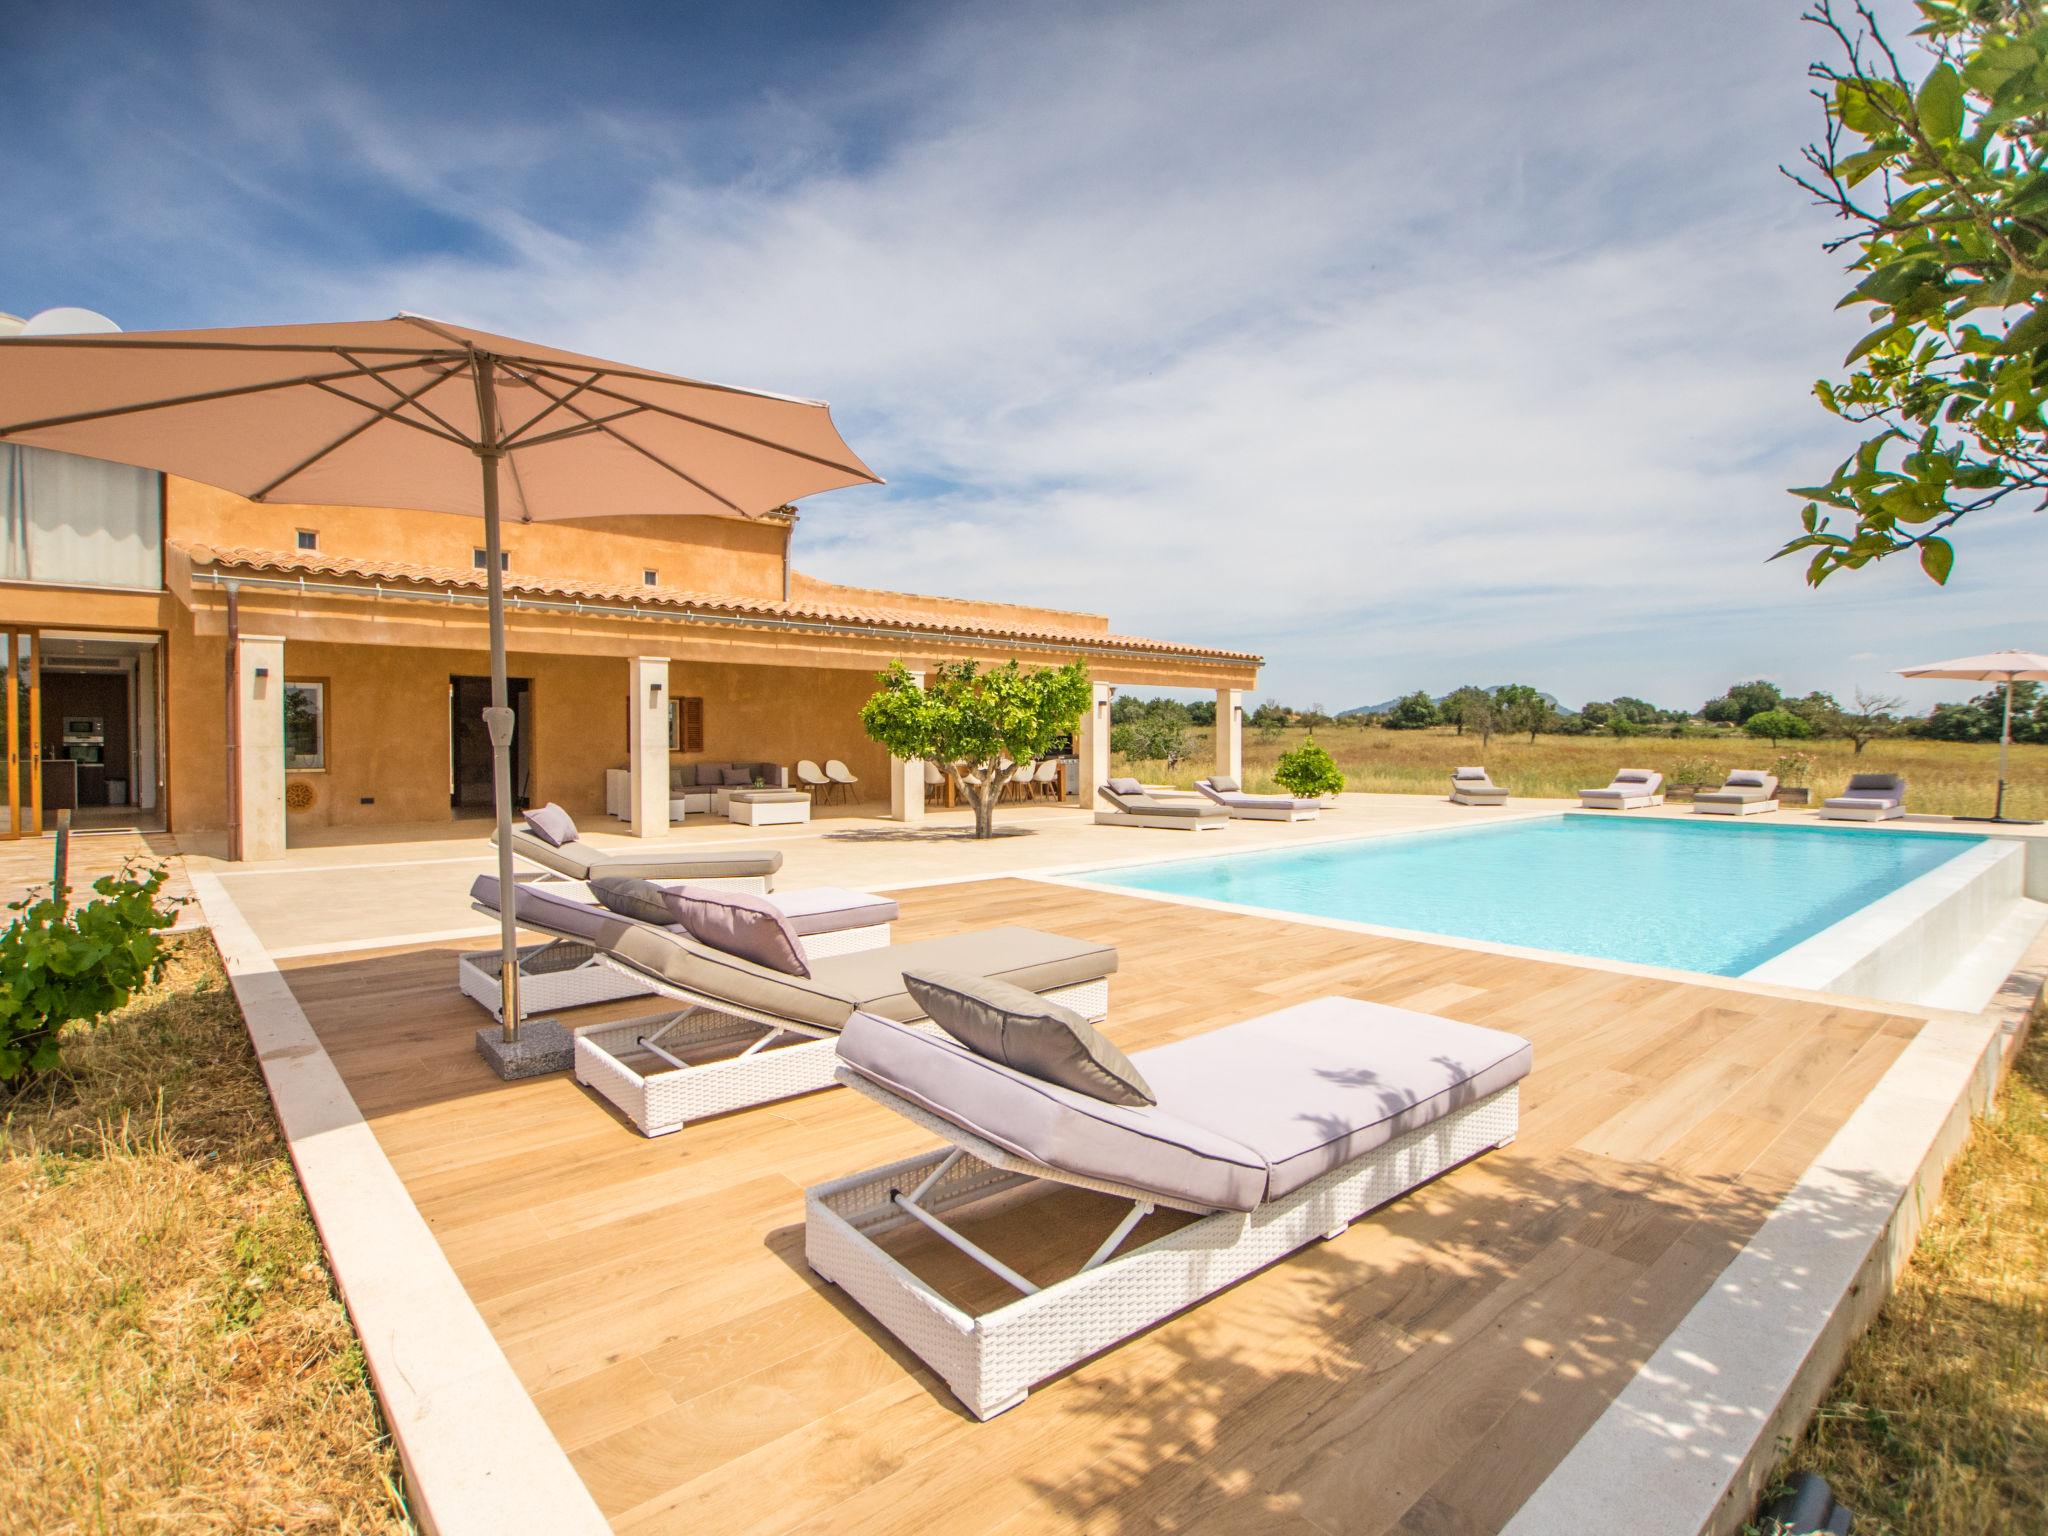 Foto 6 - Casa con 6 camere da letto a Sencelles con piscina privata e giardino